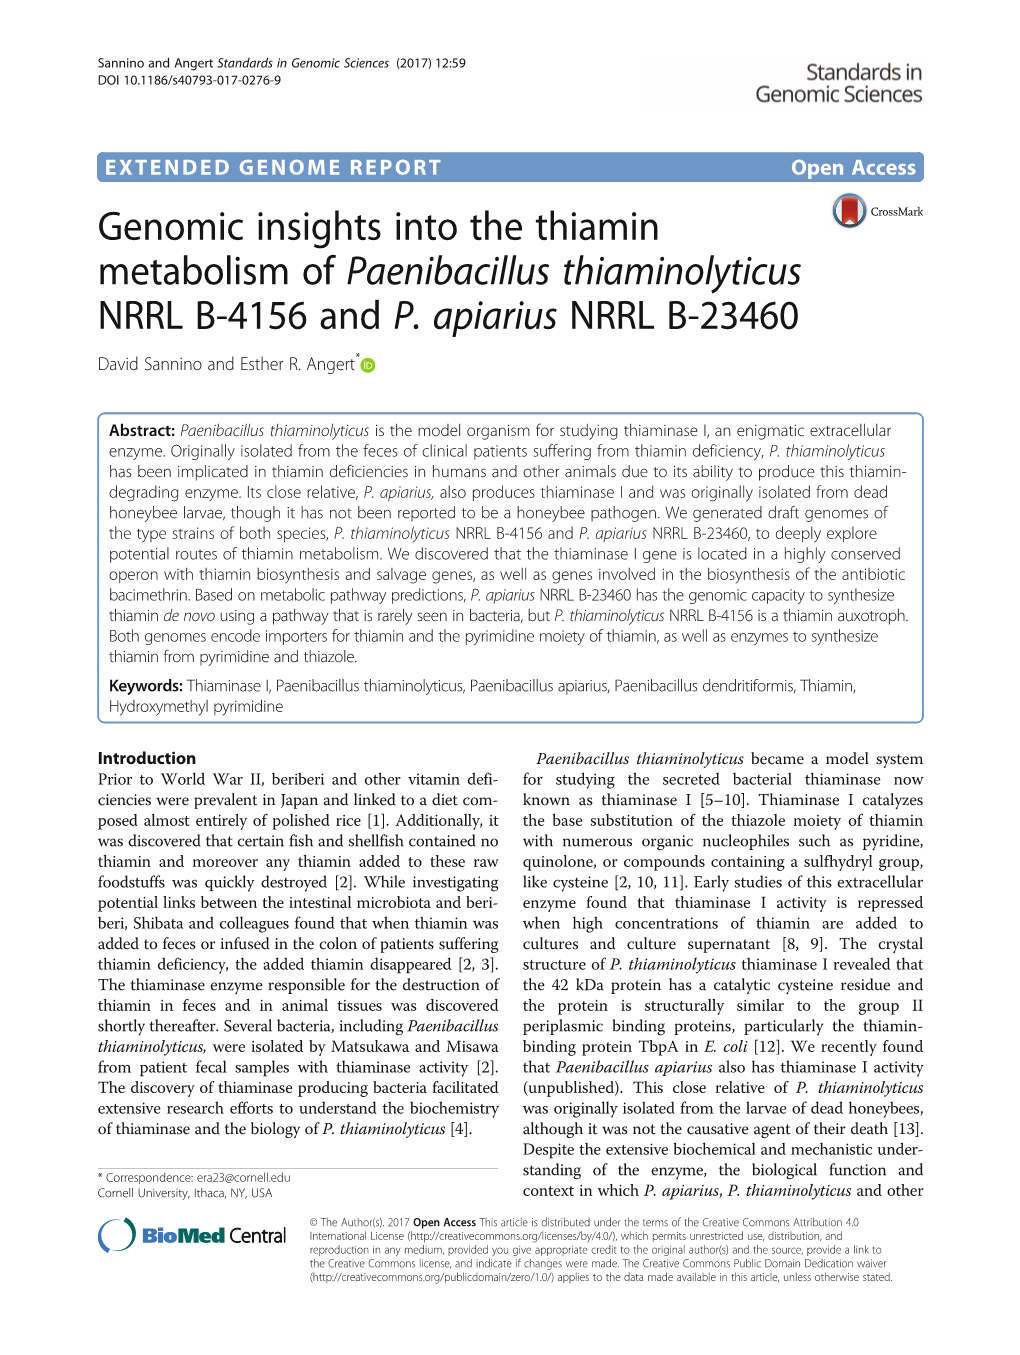 Genomic Insights Into the Thiamin Metabolism of Paenibacillus Thiaminolyticus NRRL B-4156 and P